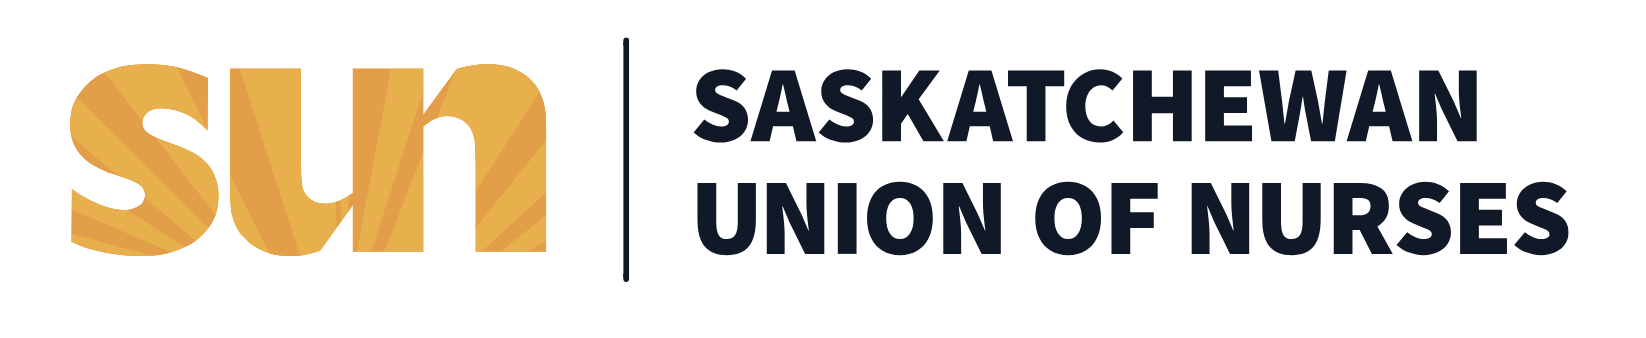 sask union of nursing logo